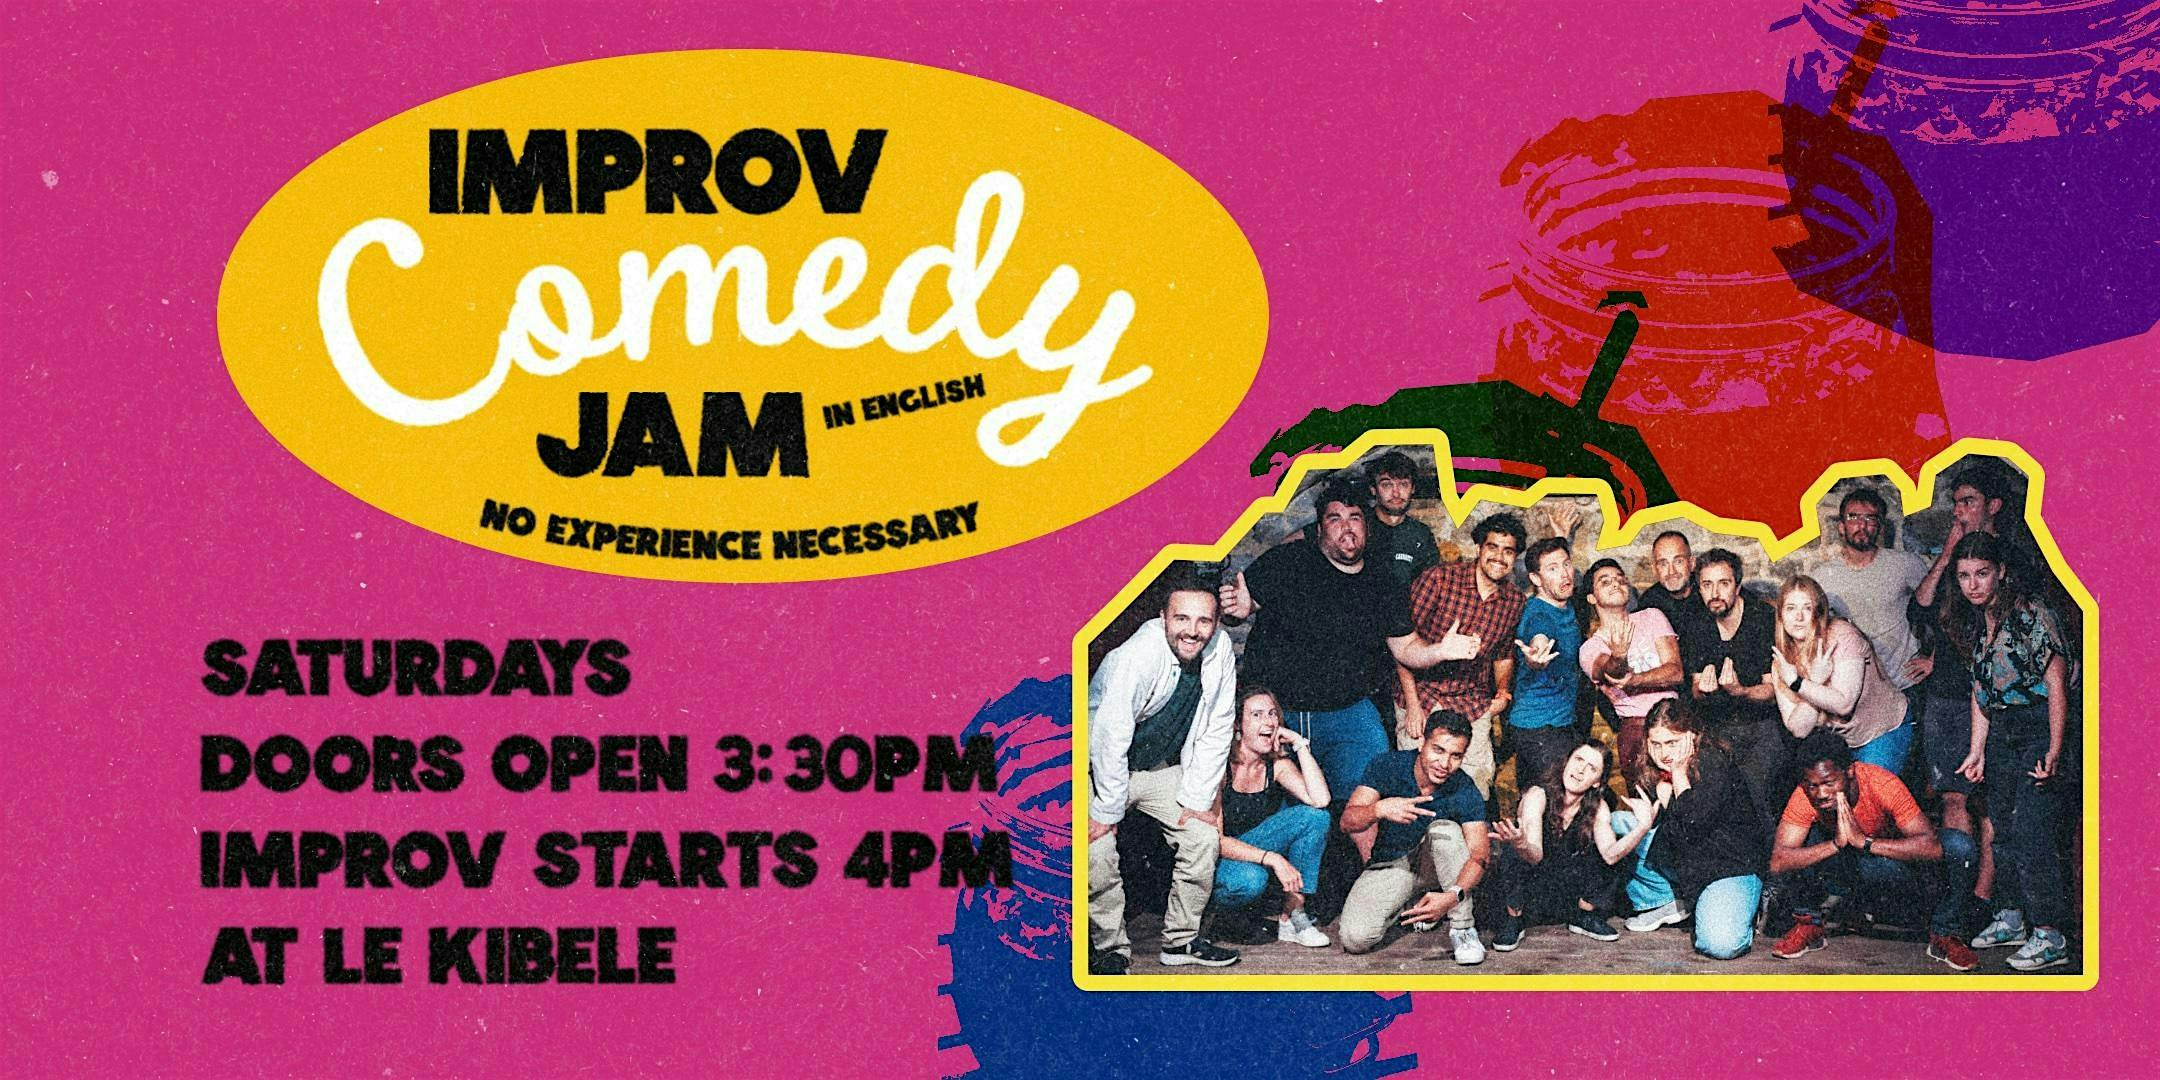 Improv Comedy Jam In English logo